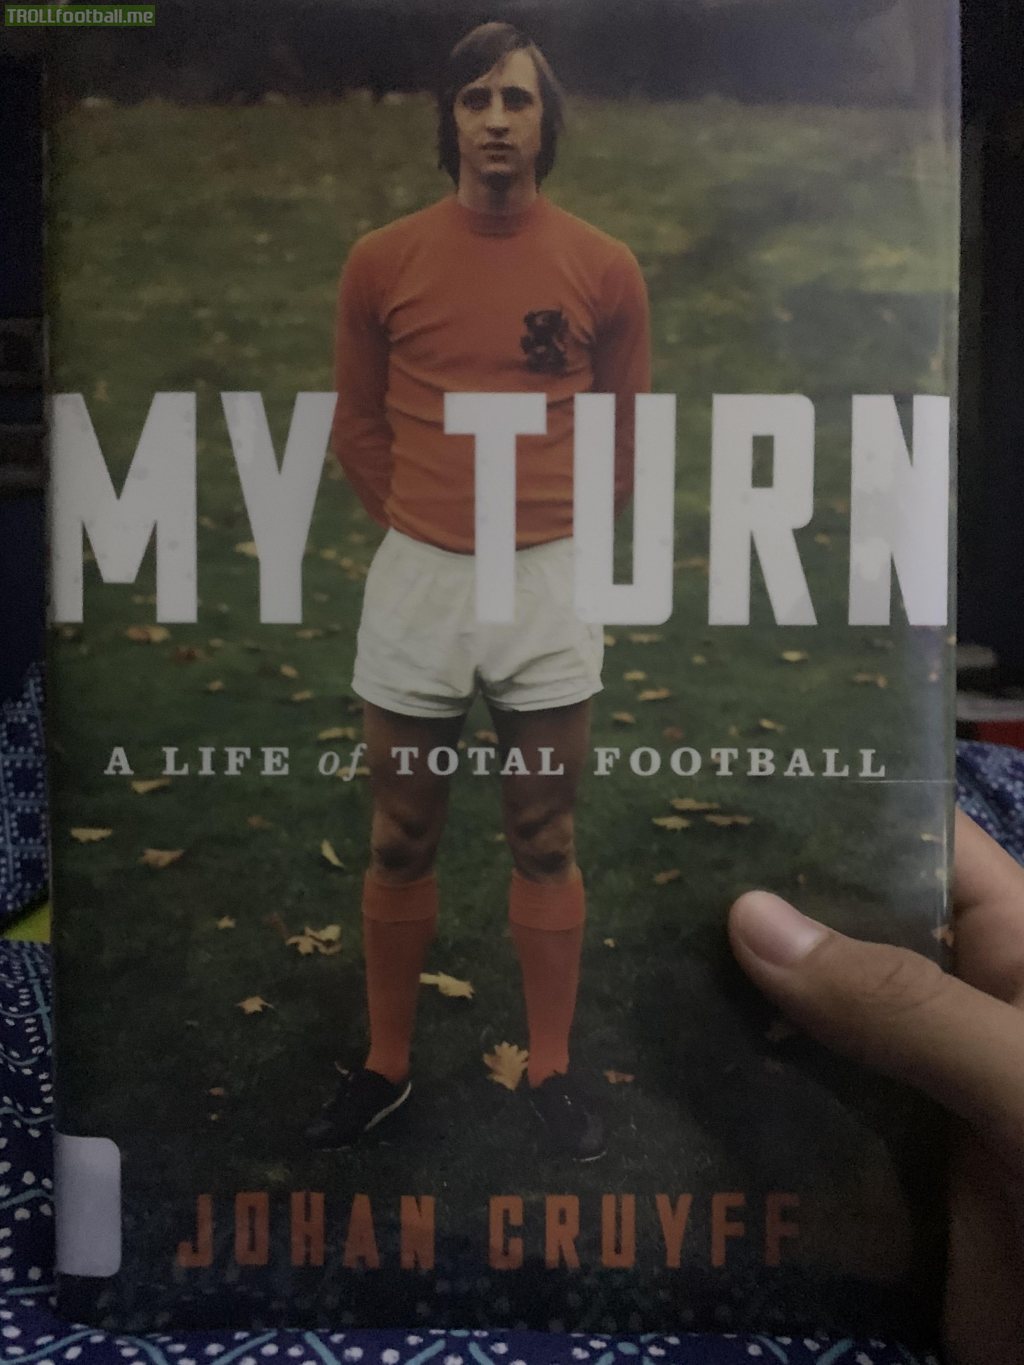 I encourage everything football fan to read the work of Johan Cruyff